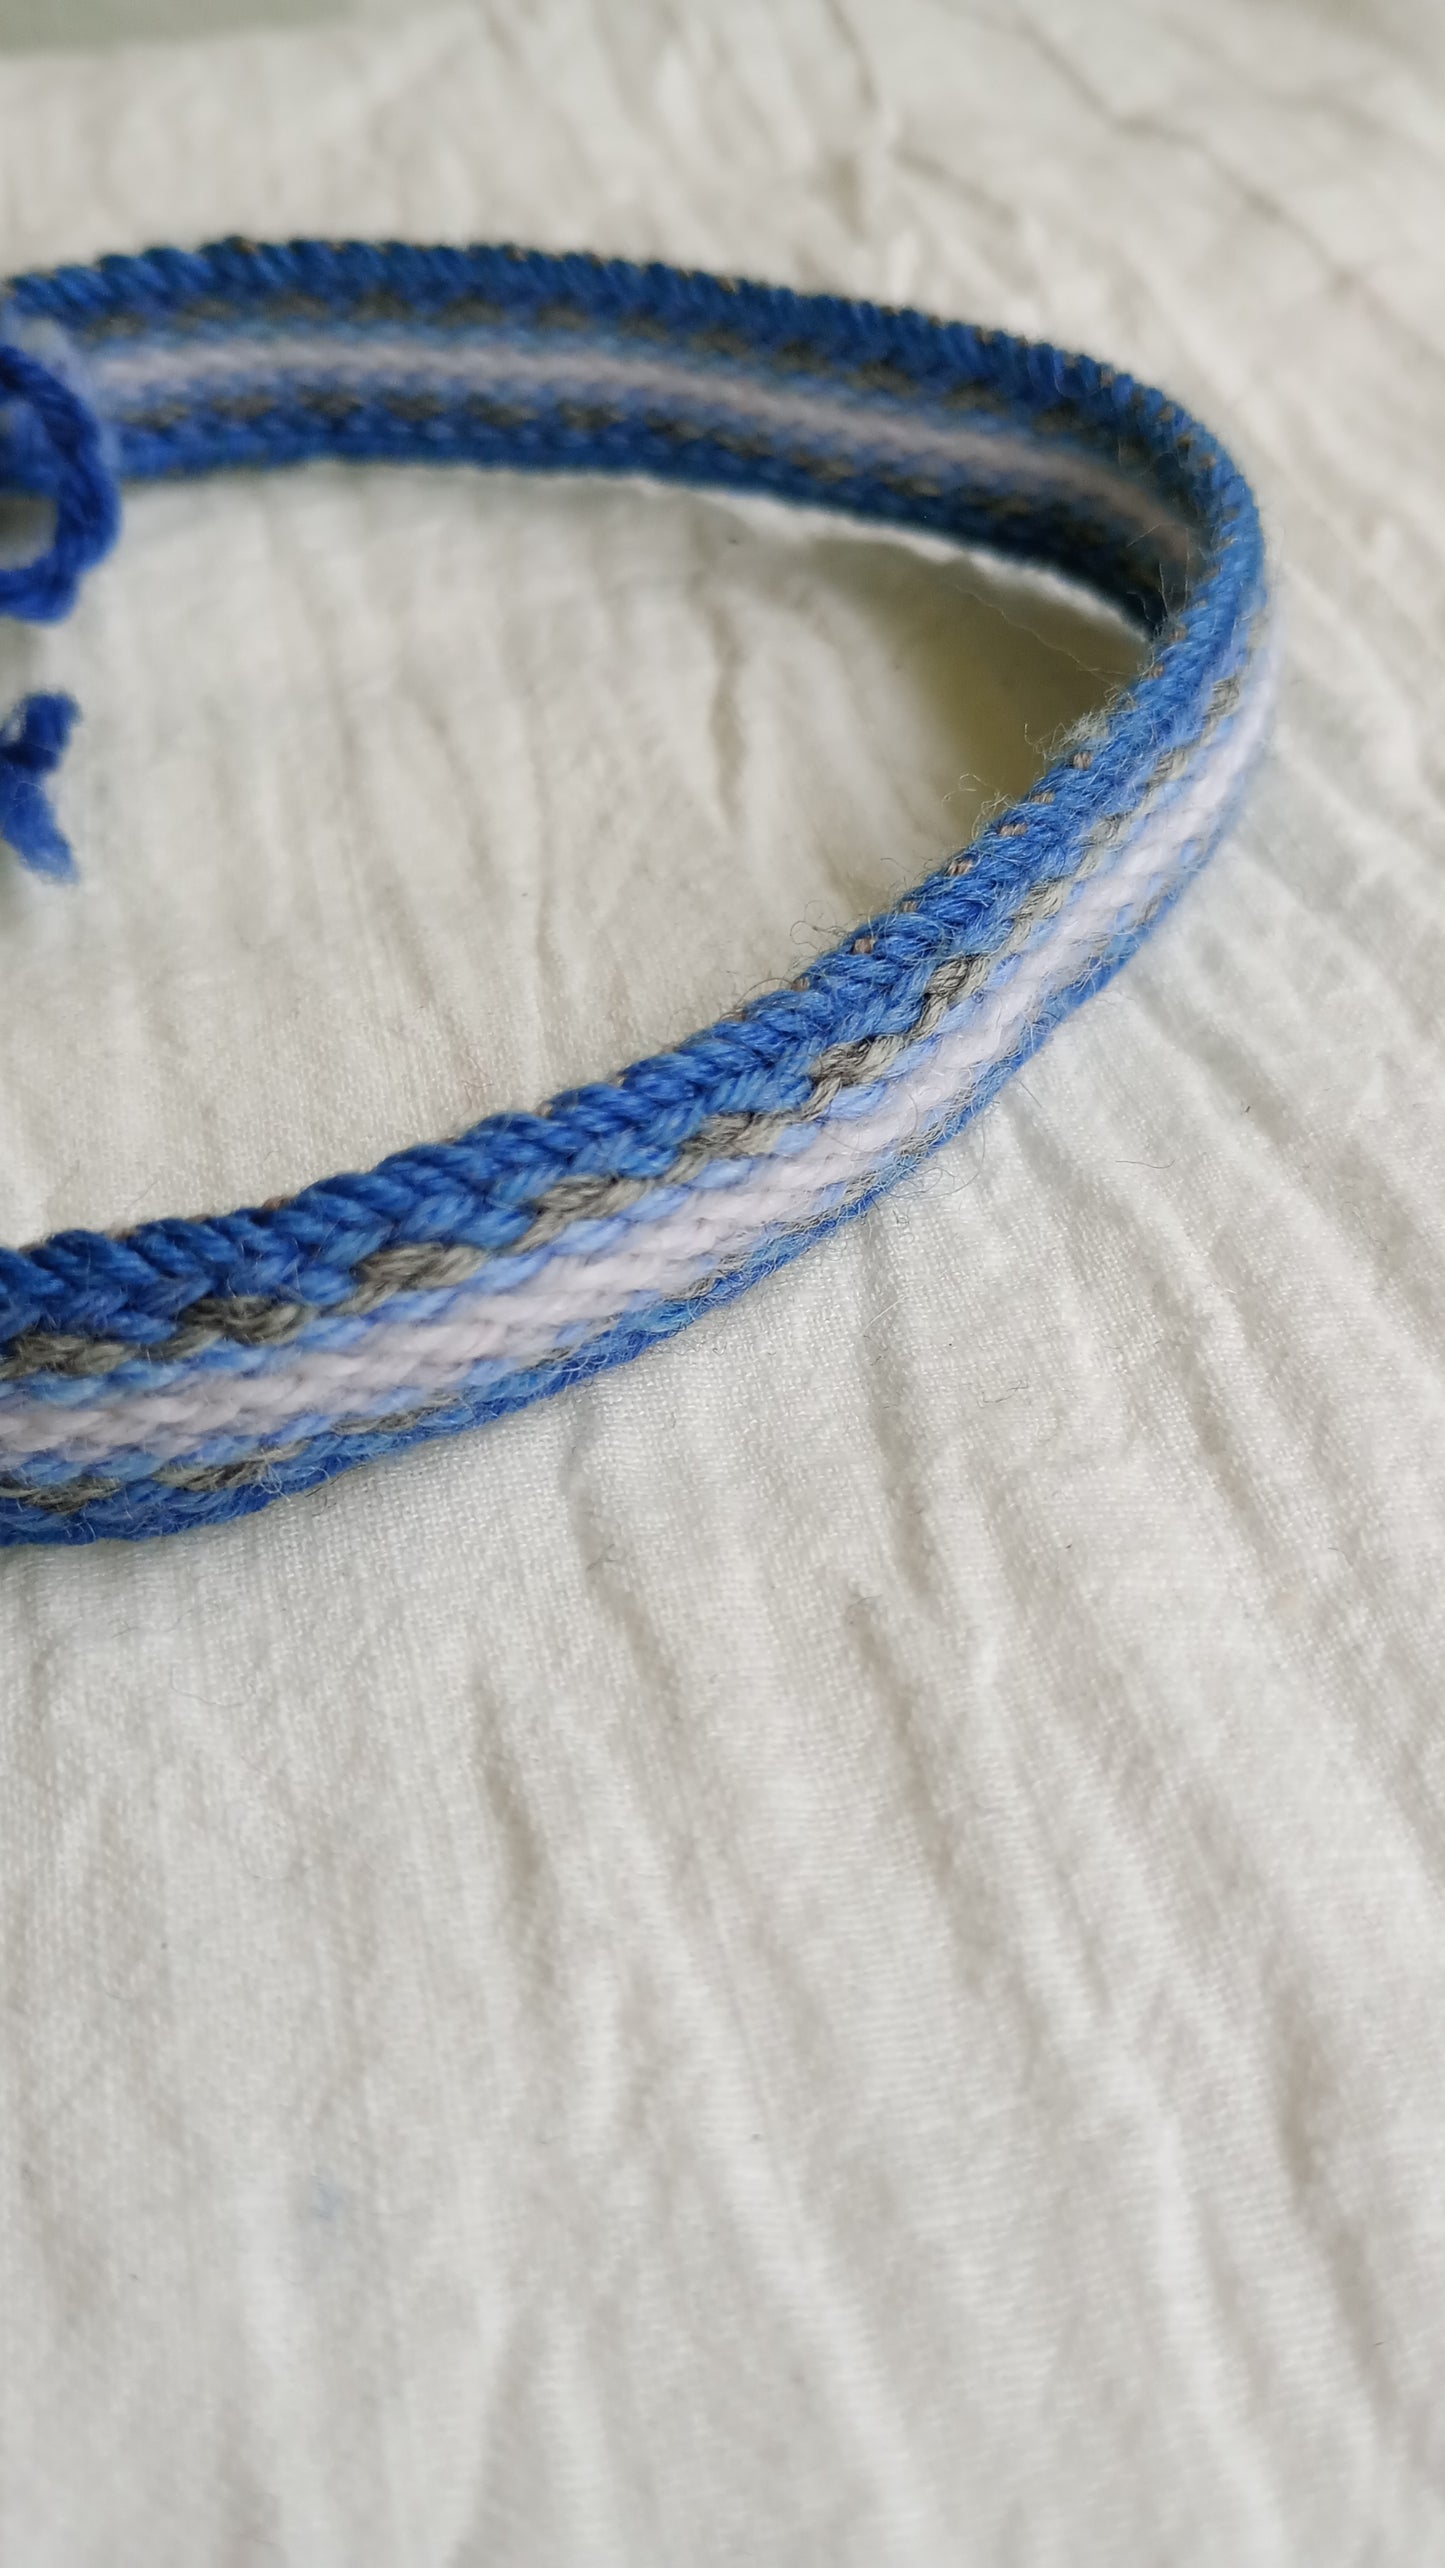 Baltic style headband in shades of sea blue